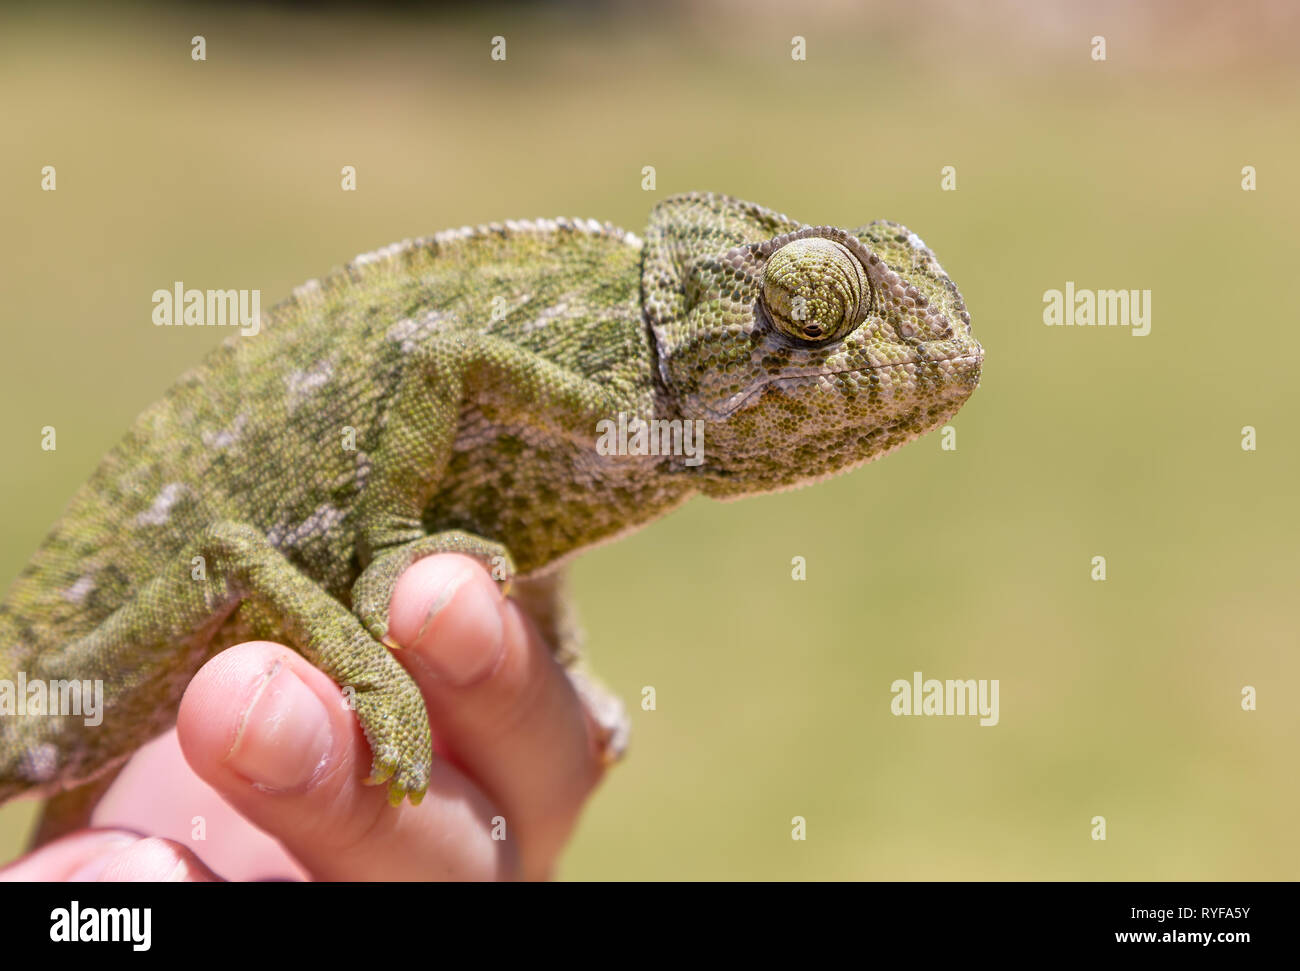 Hand holding a green chameleon Stock Photo